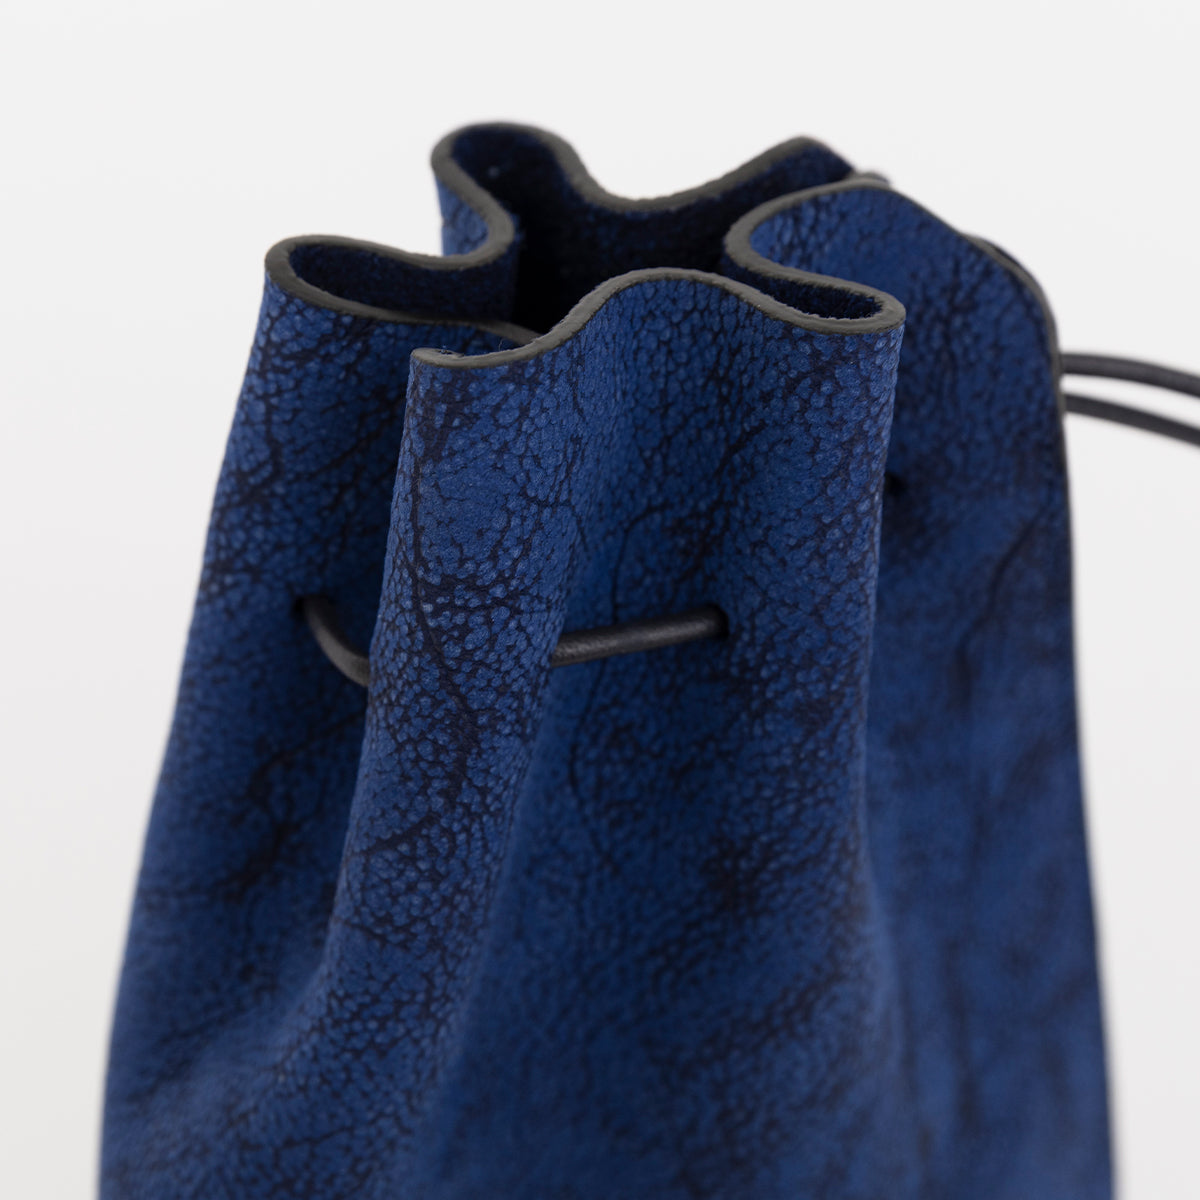 HERRIE KINCHAKU POUCH - PM / NUBUCK SHIRO (ヘリー巾着ポーチ / ヌバック白鞣し皮革) - ITTI (イッチ) ブルー 青 バッグ 鞄 かばん カバン ショルダー 斜め掛け 肩掛け 牛革 ブランド メンズ レディース